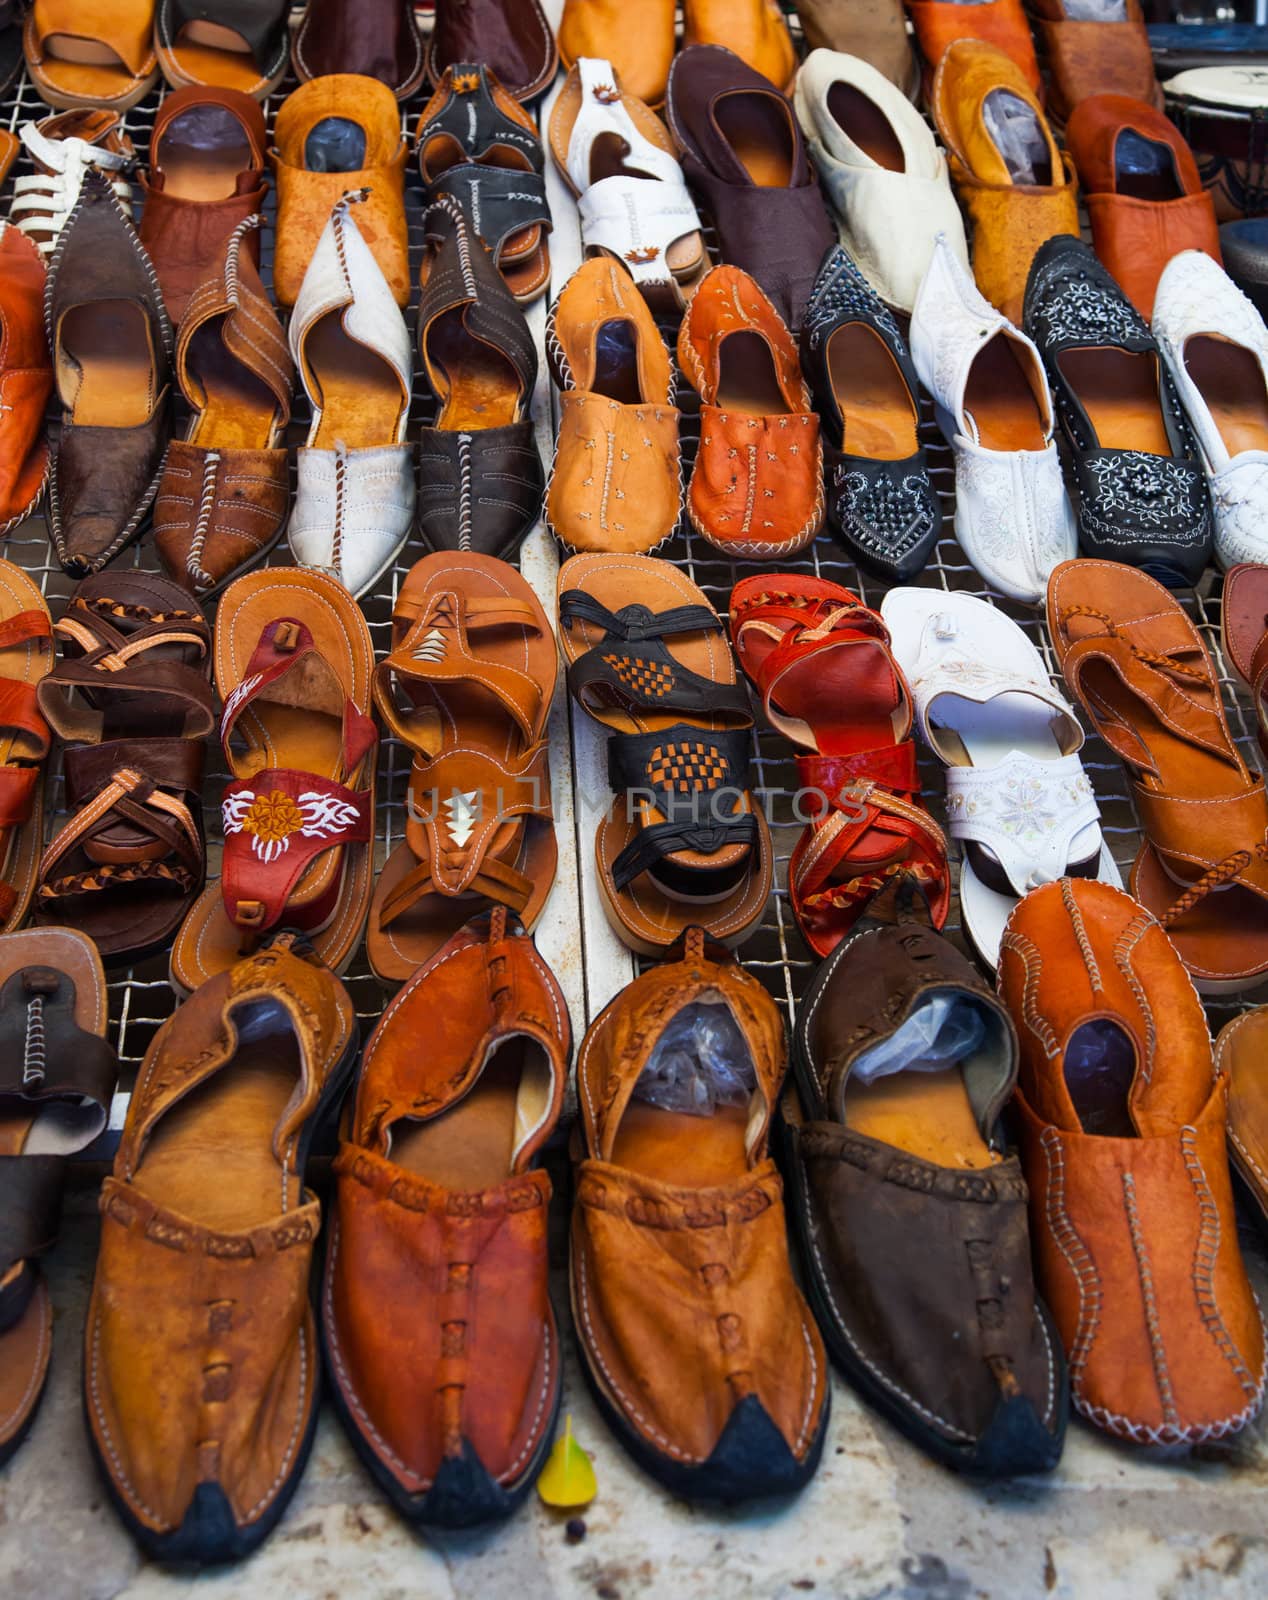 Shoes for sale on a tunisian street - Djerba